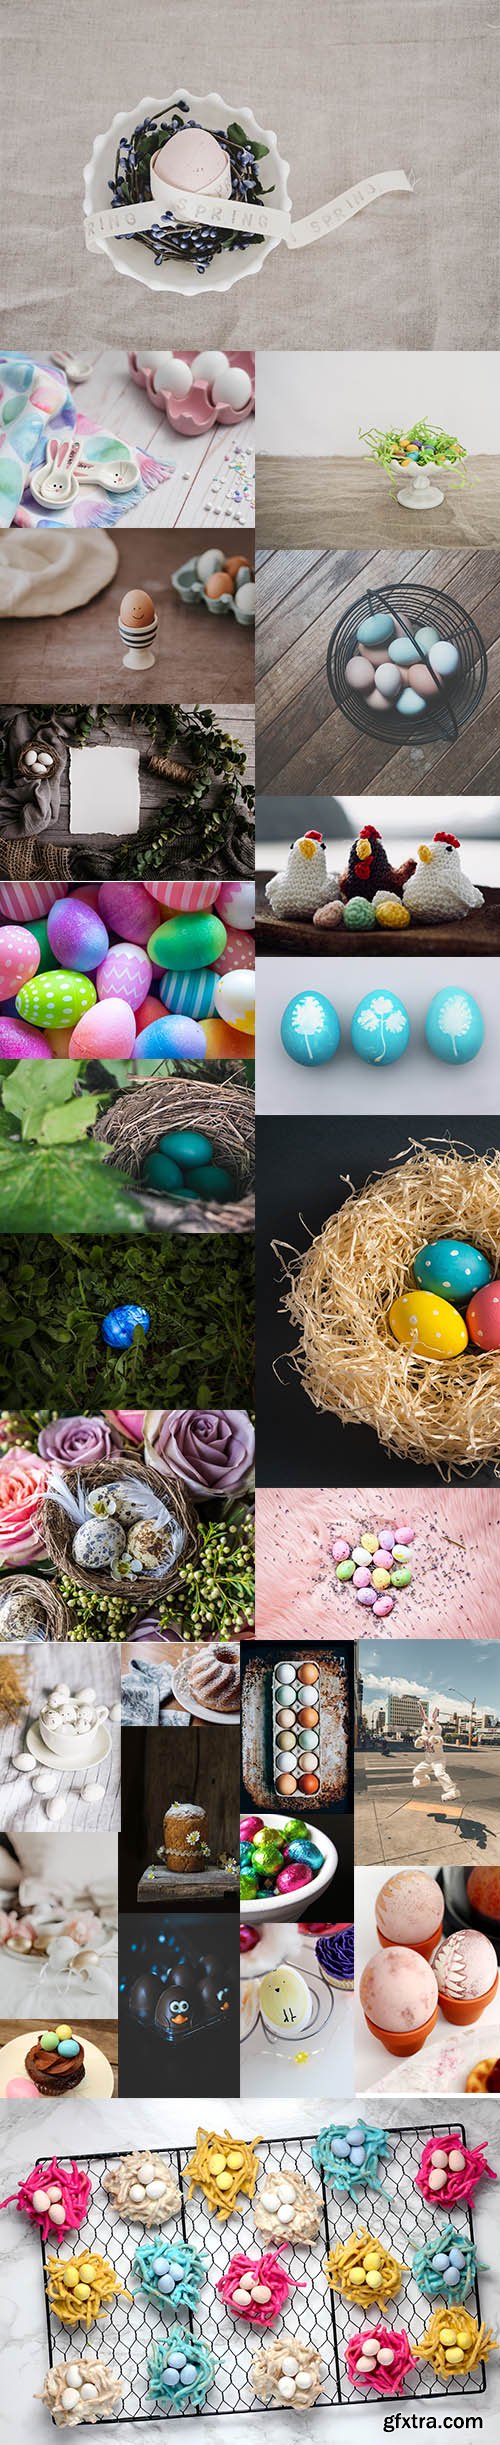 Happy Easter Bundle - Premium UHQ Stock Photo Vol 2